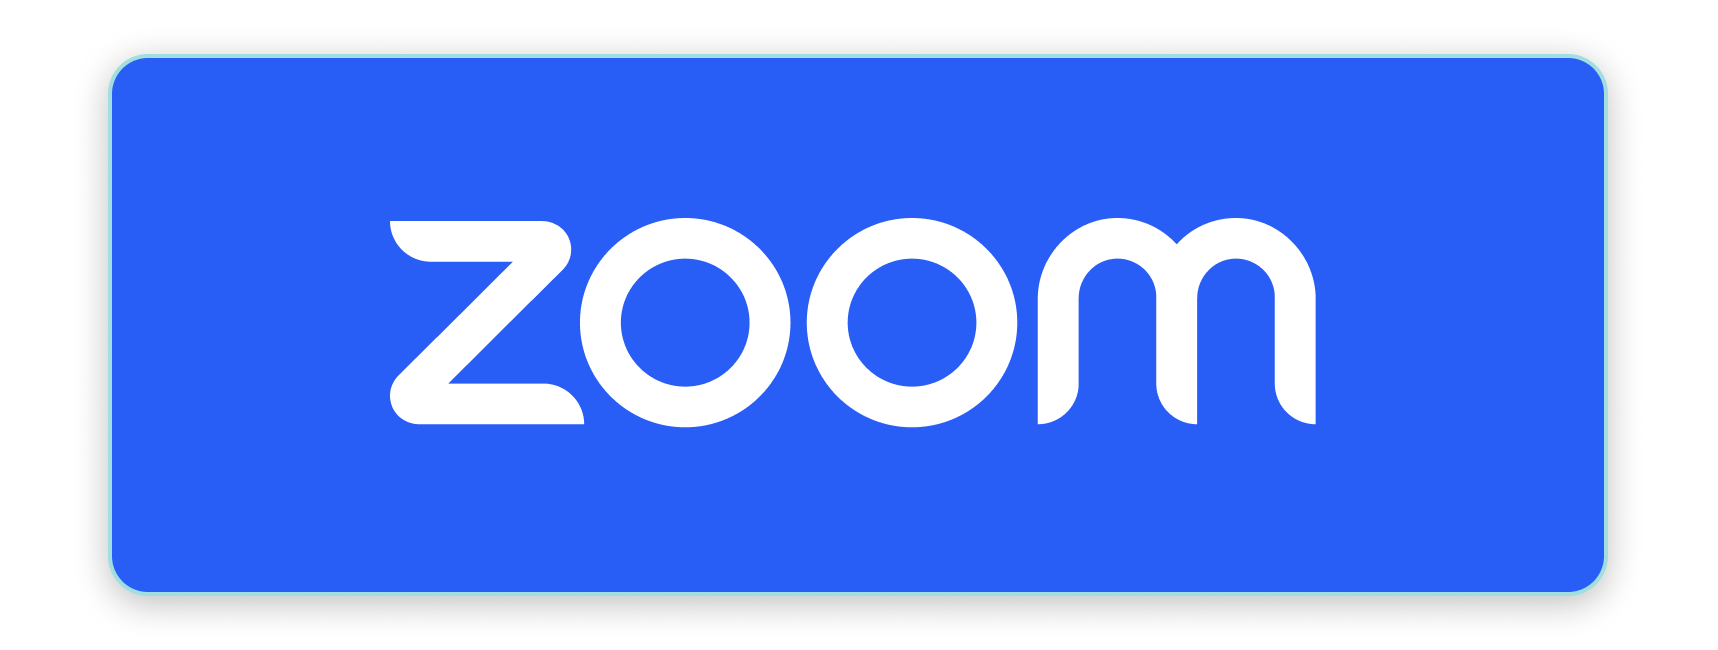 Video: Zoom logo, blue background